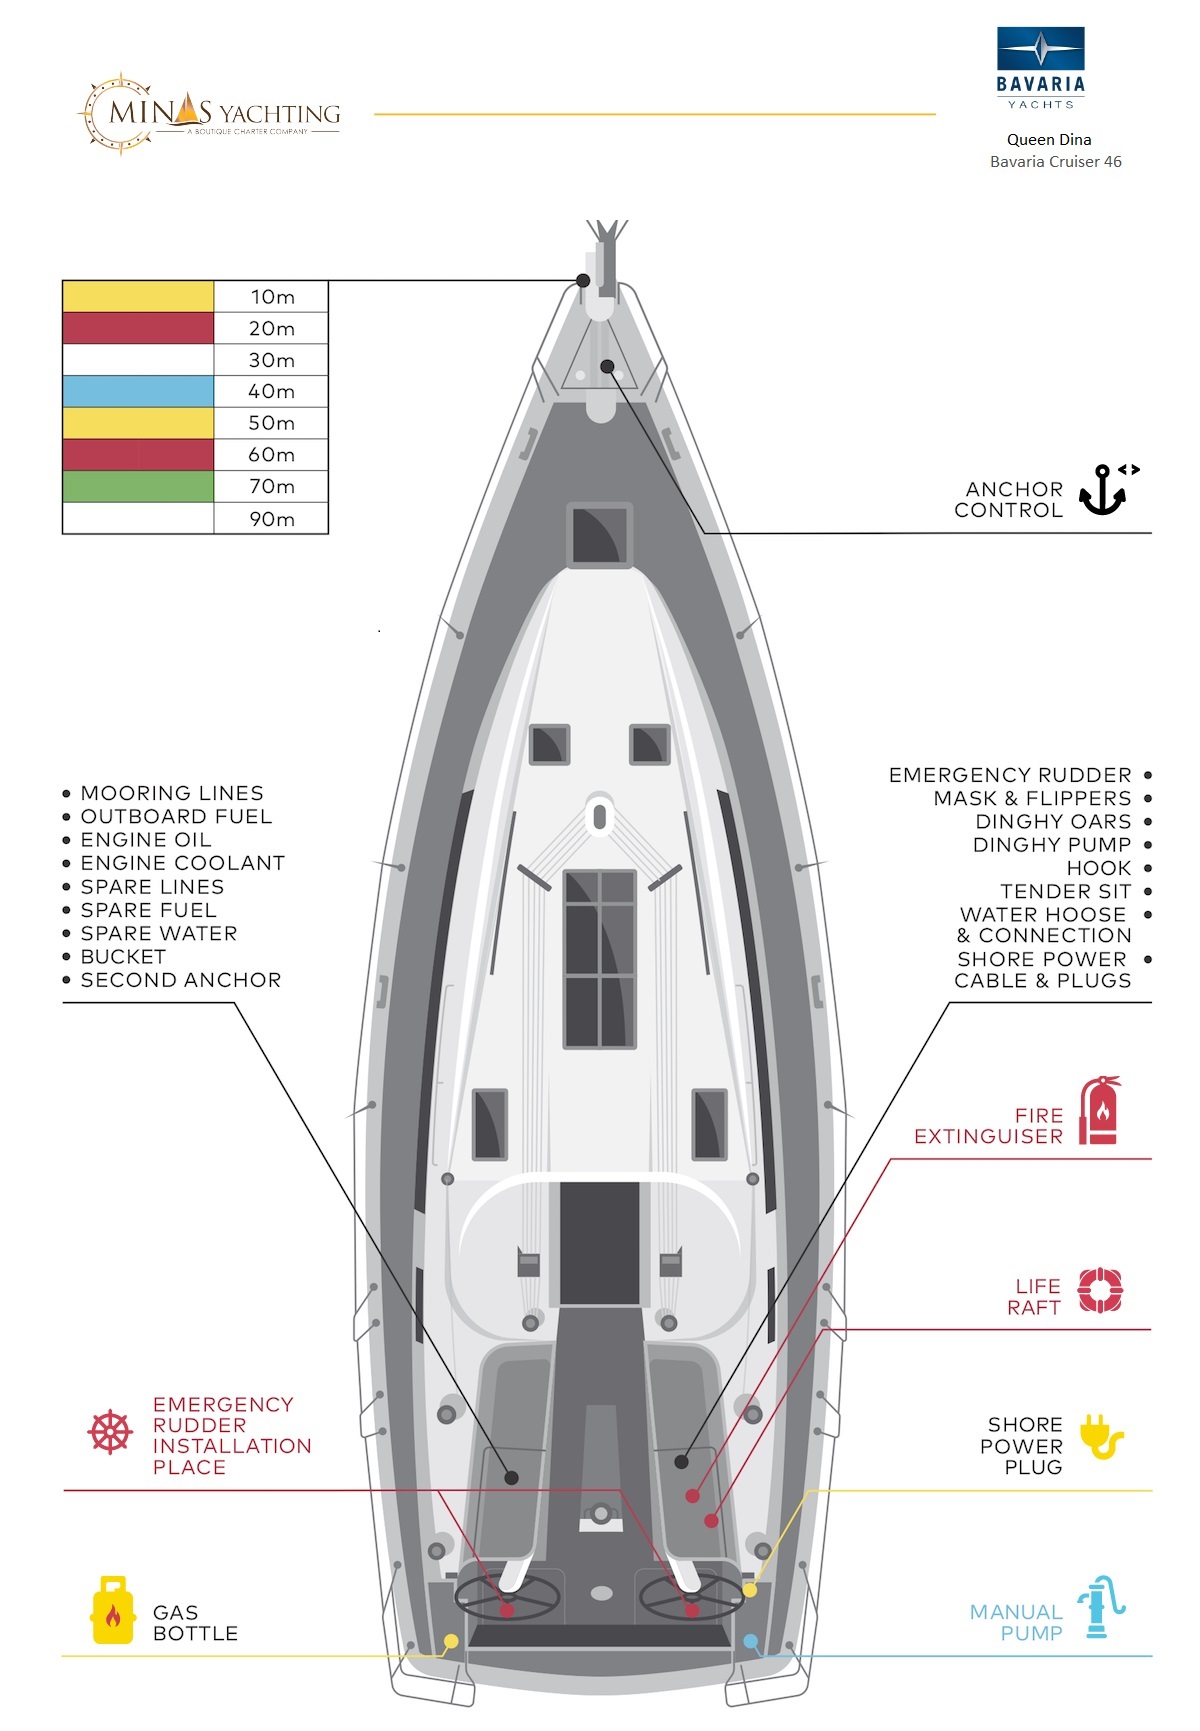 BAVARIA CRUISER 46 INTERIOR 1 - minas yachting - charter a yacht in Kerkira